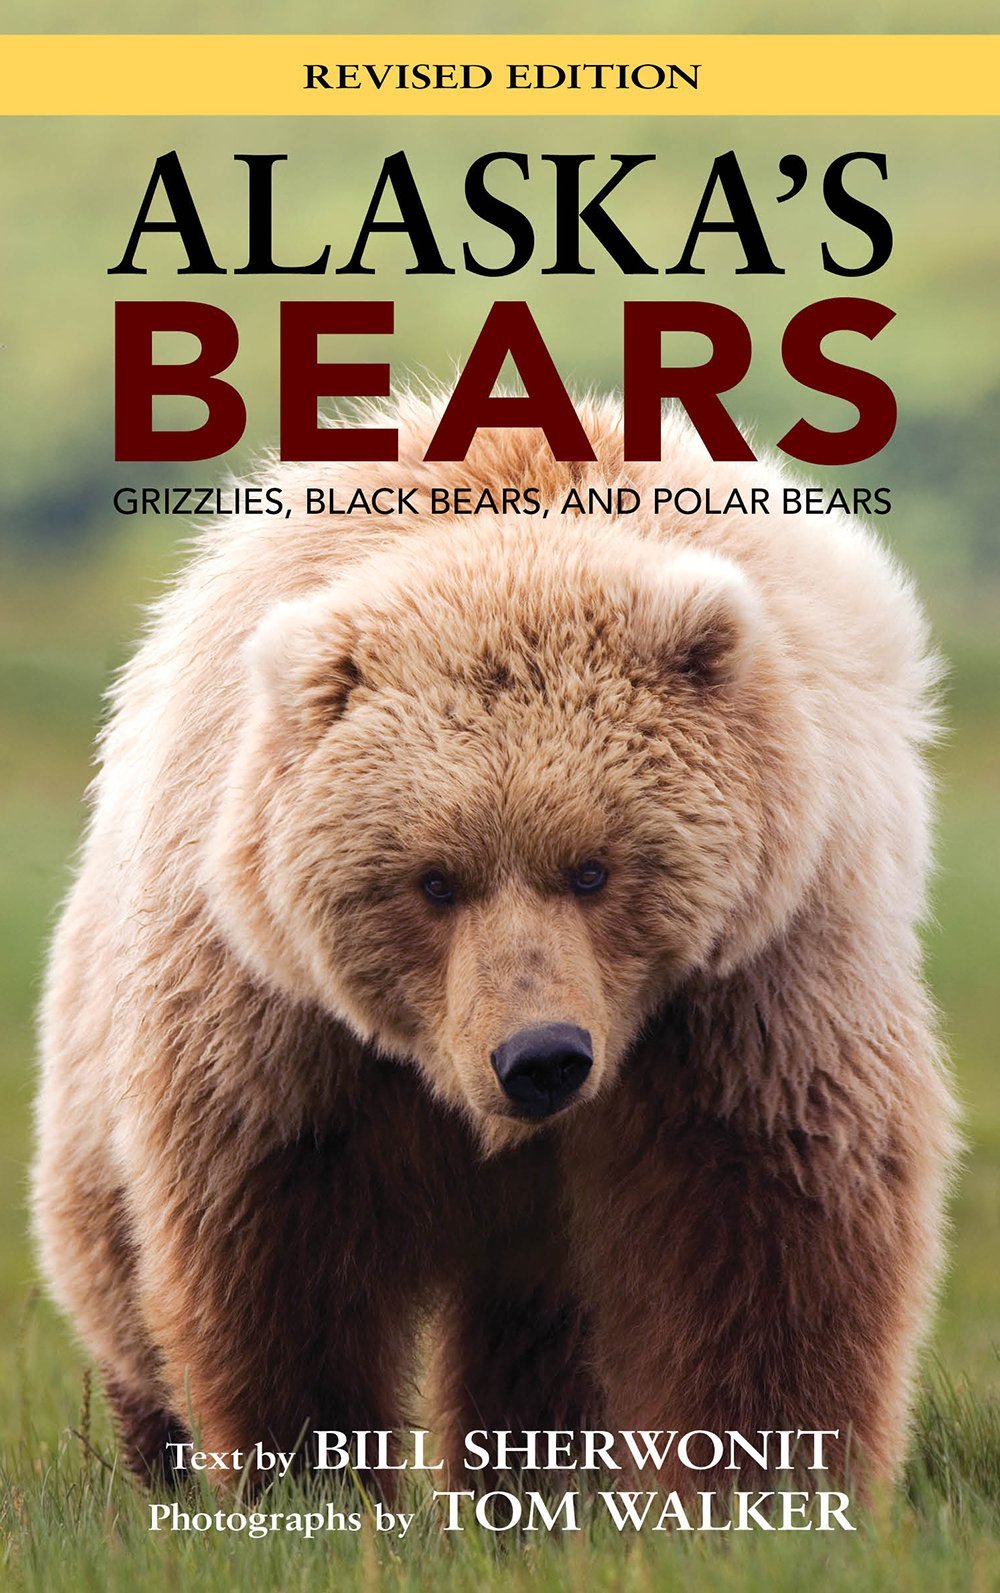 09152016_alaskas-bears_book